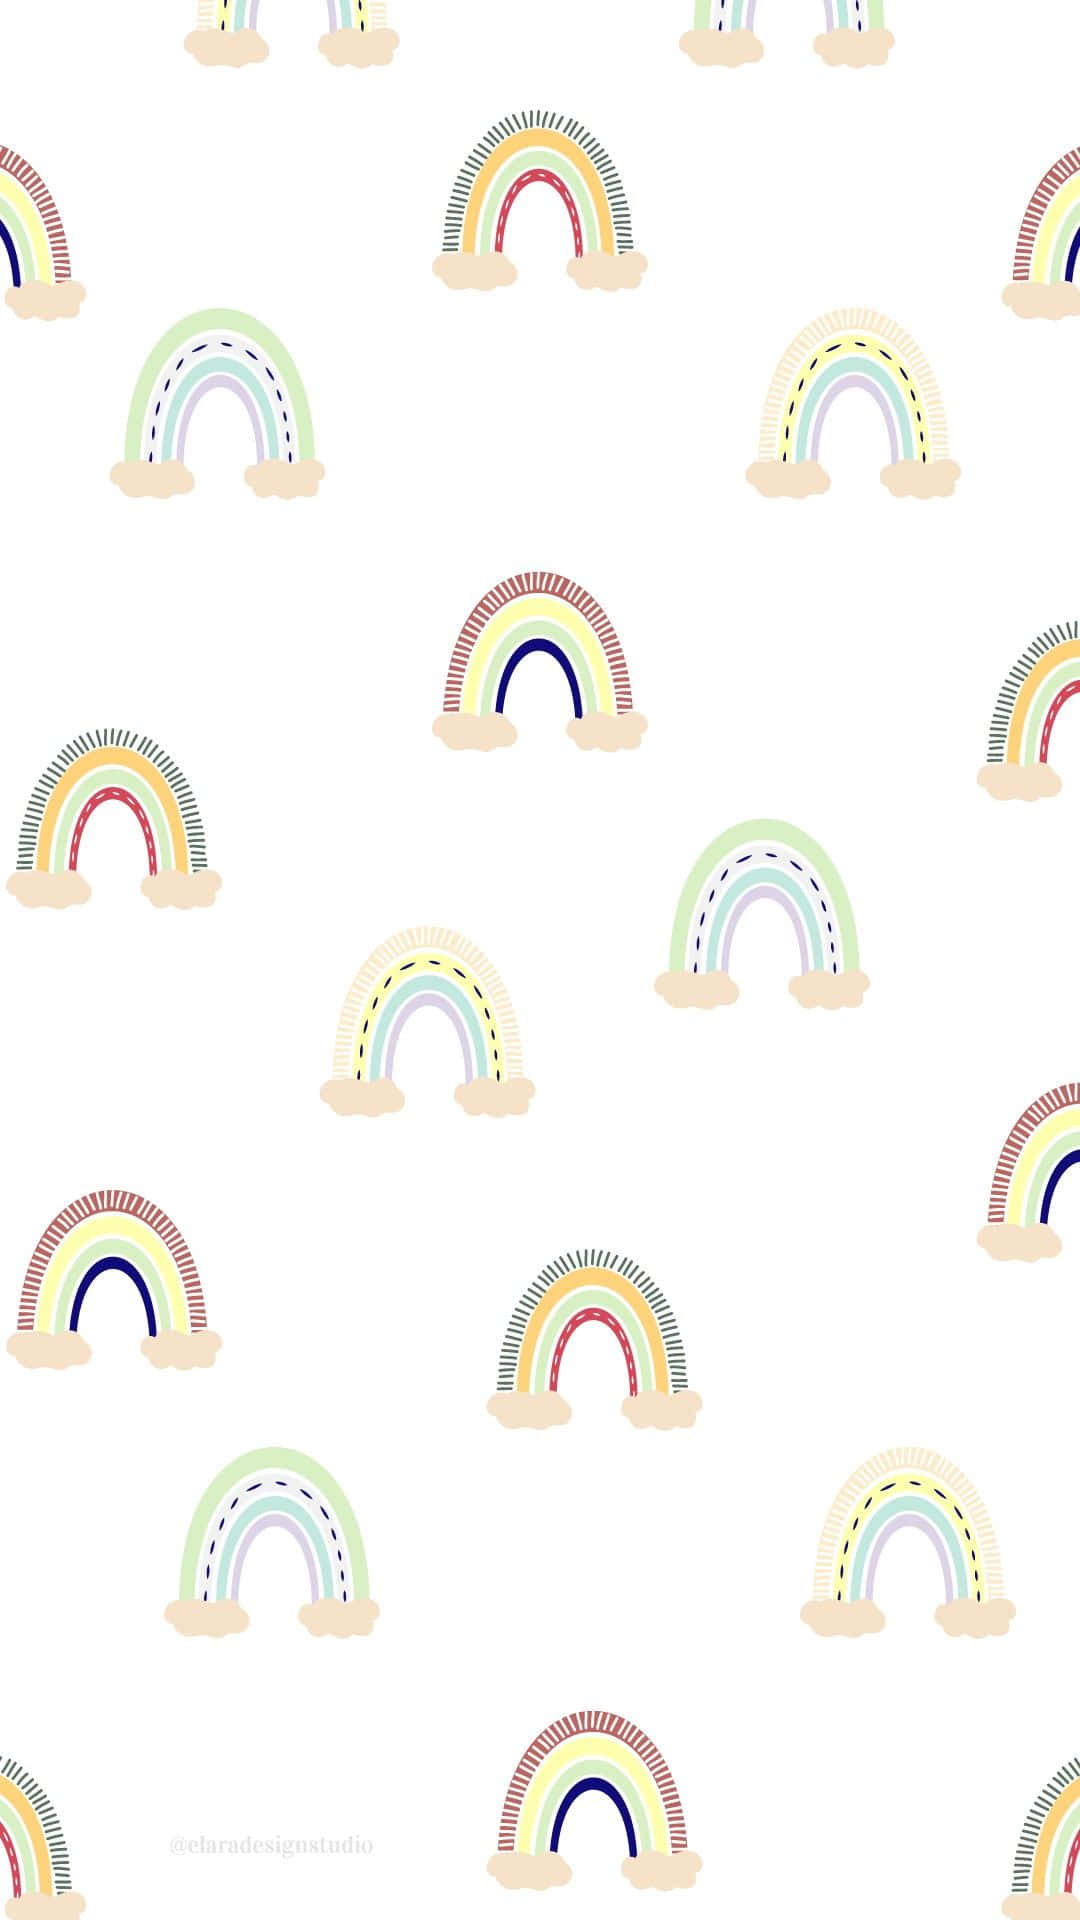 Ettpastellregnbåge Av Färger På En Iphone. Wallpaper